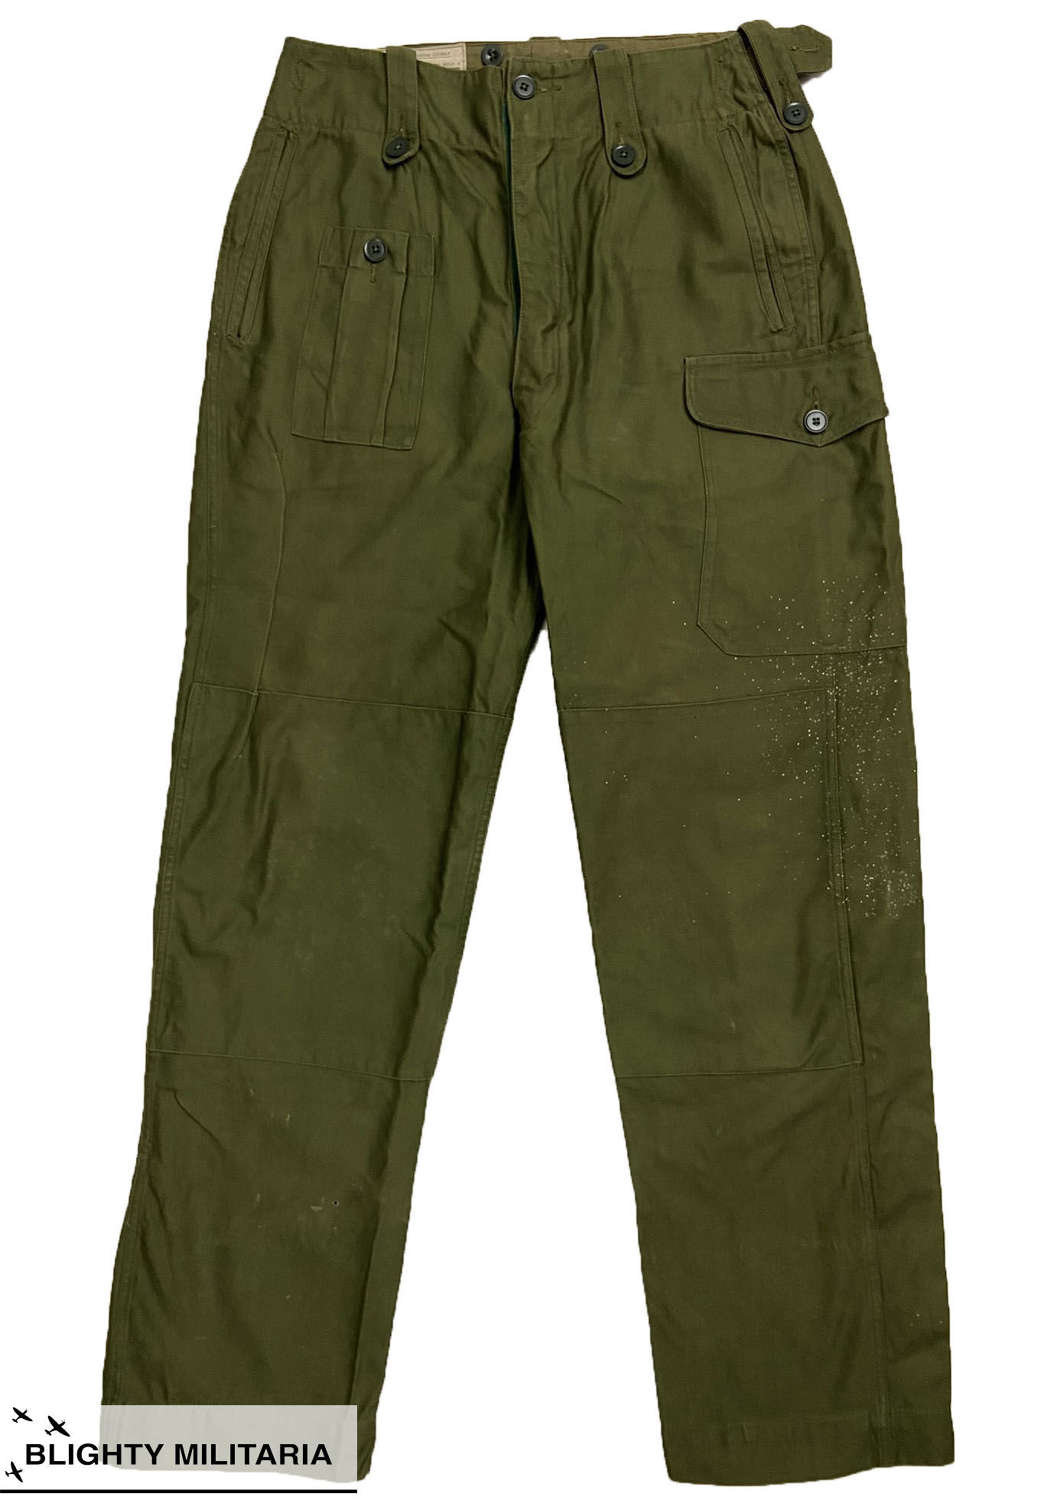 Original 1960 Pattern Combat Trousers - Size 4